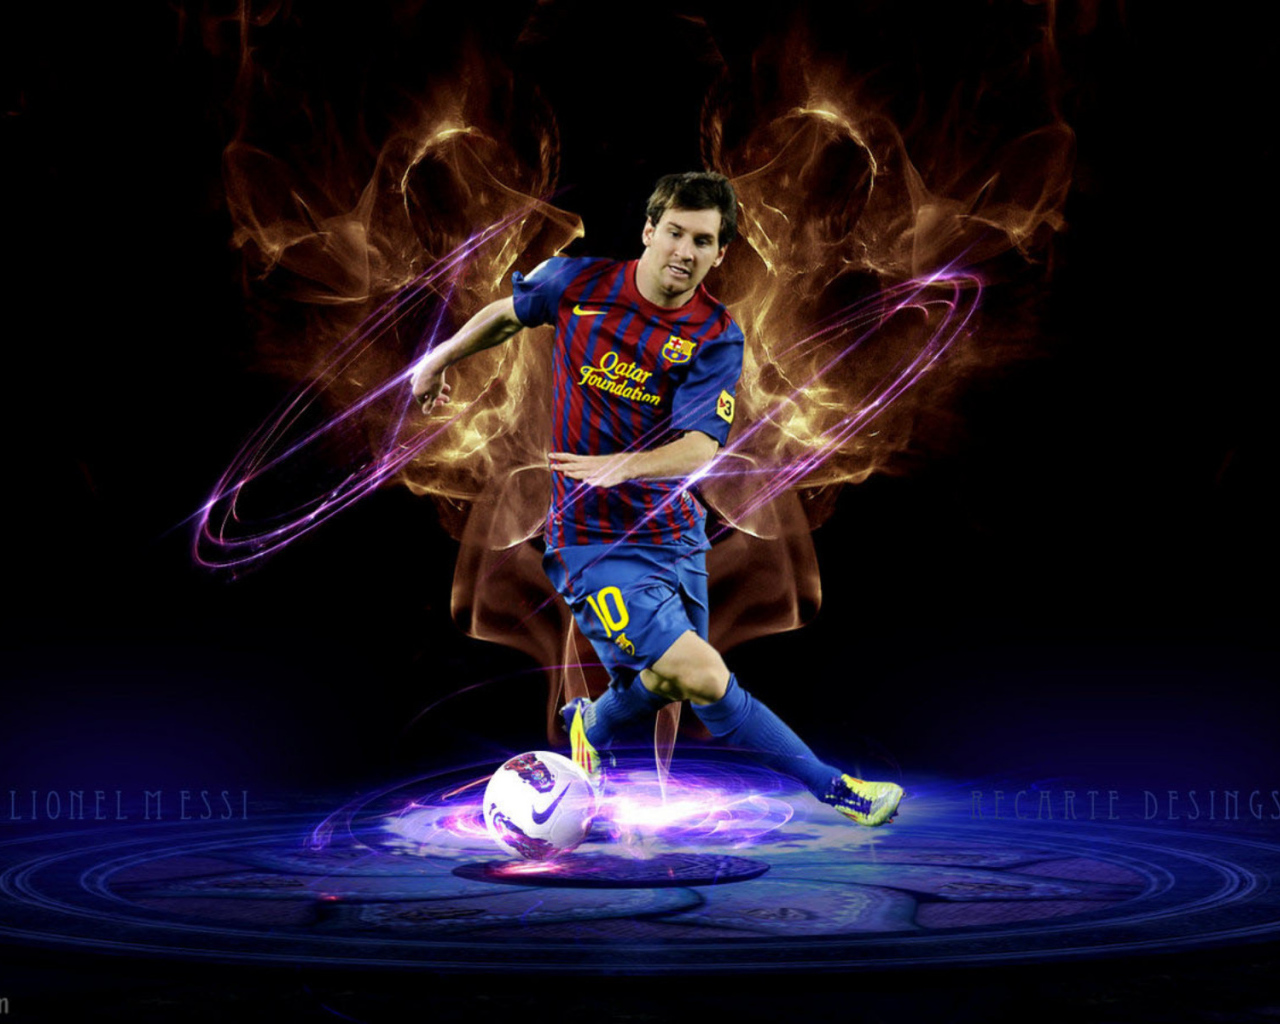 The forward of Barcelona Lionel Messi in dark background